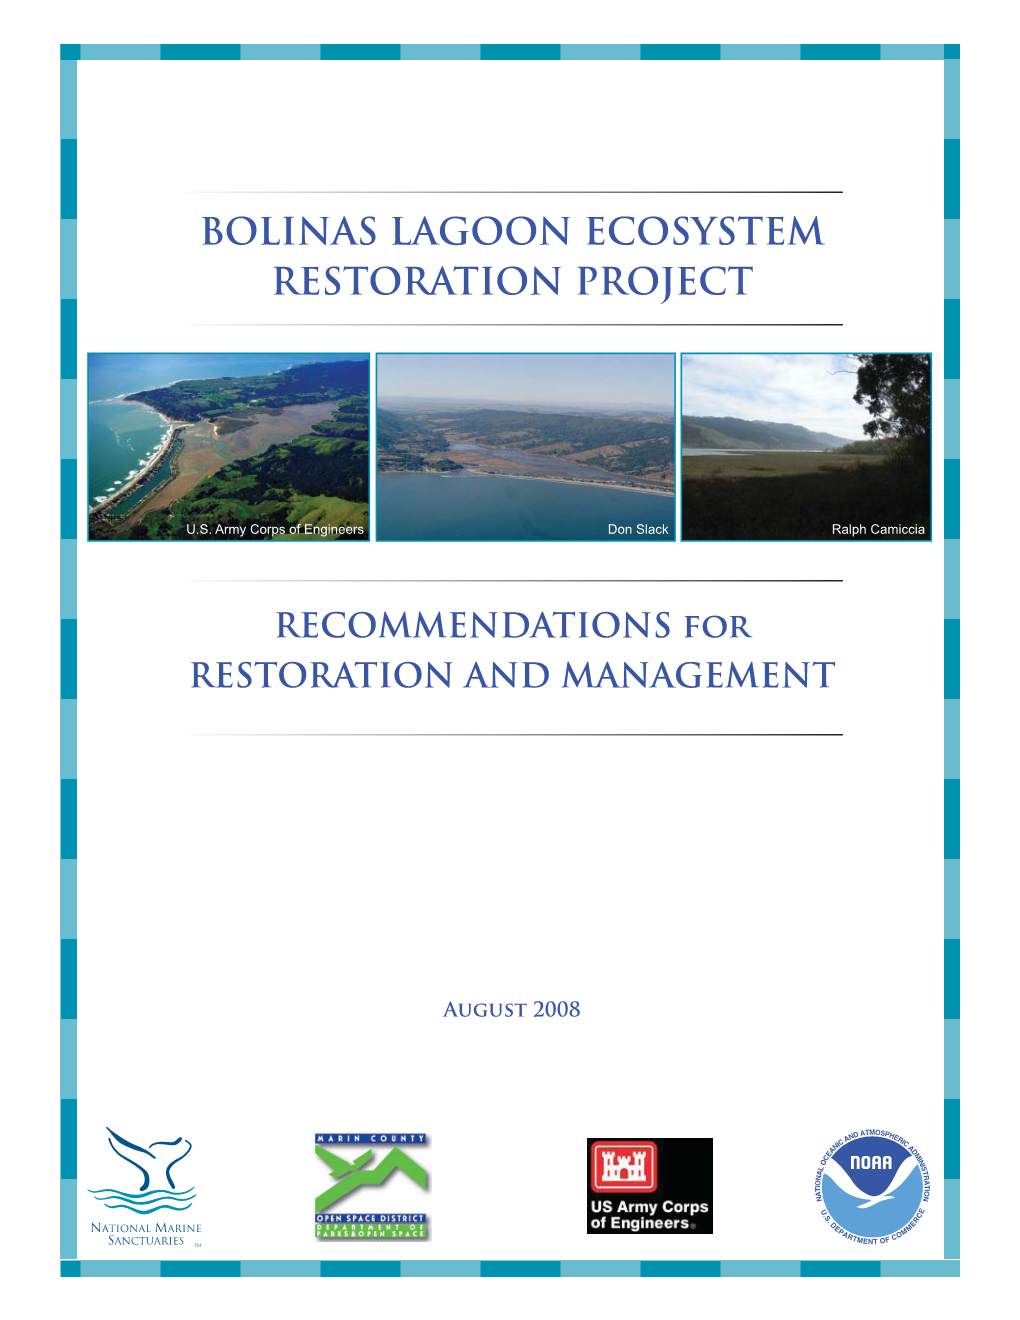 Bolinas Lagoon Ecosystem Restoration Project